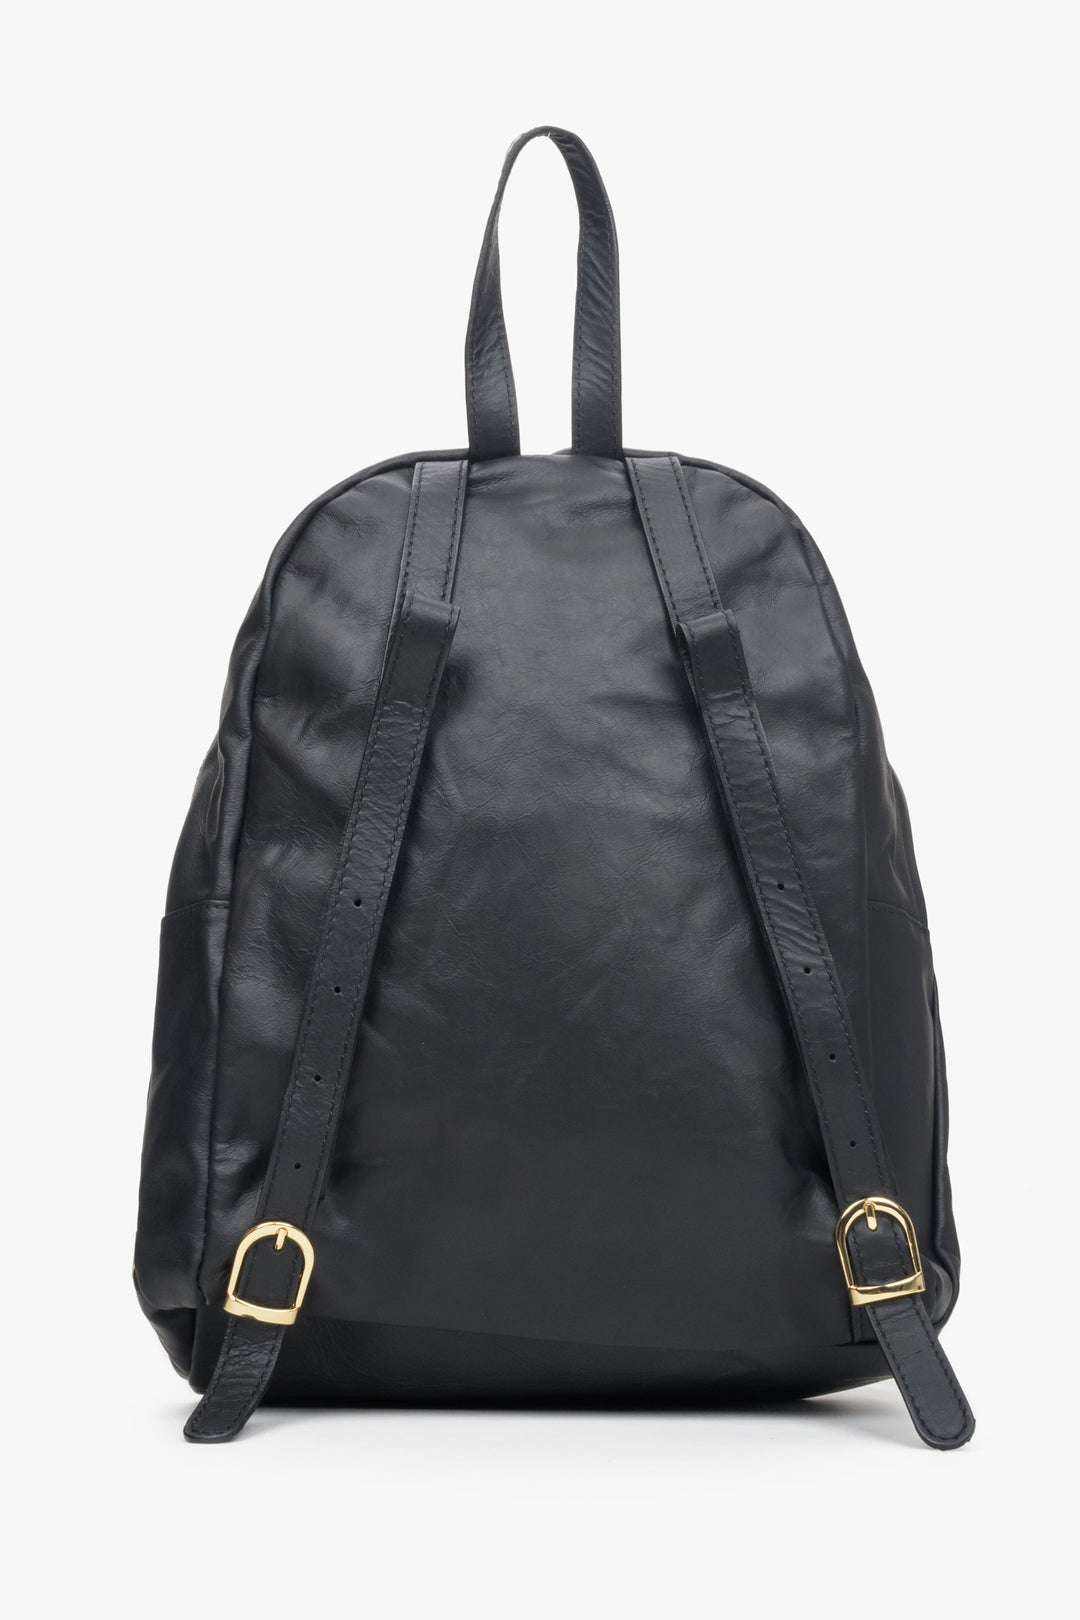 Black women's backpack Estro made in Italy - reverse.